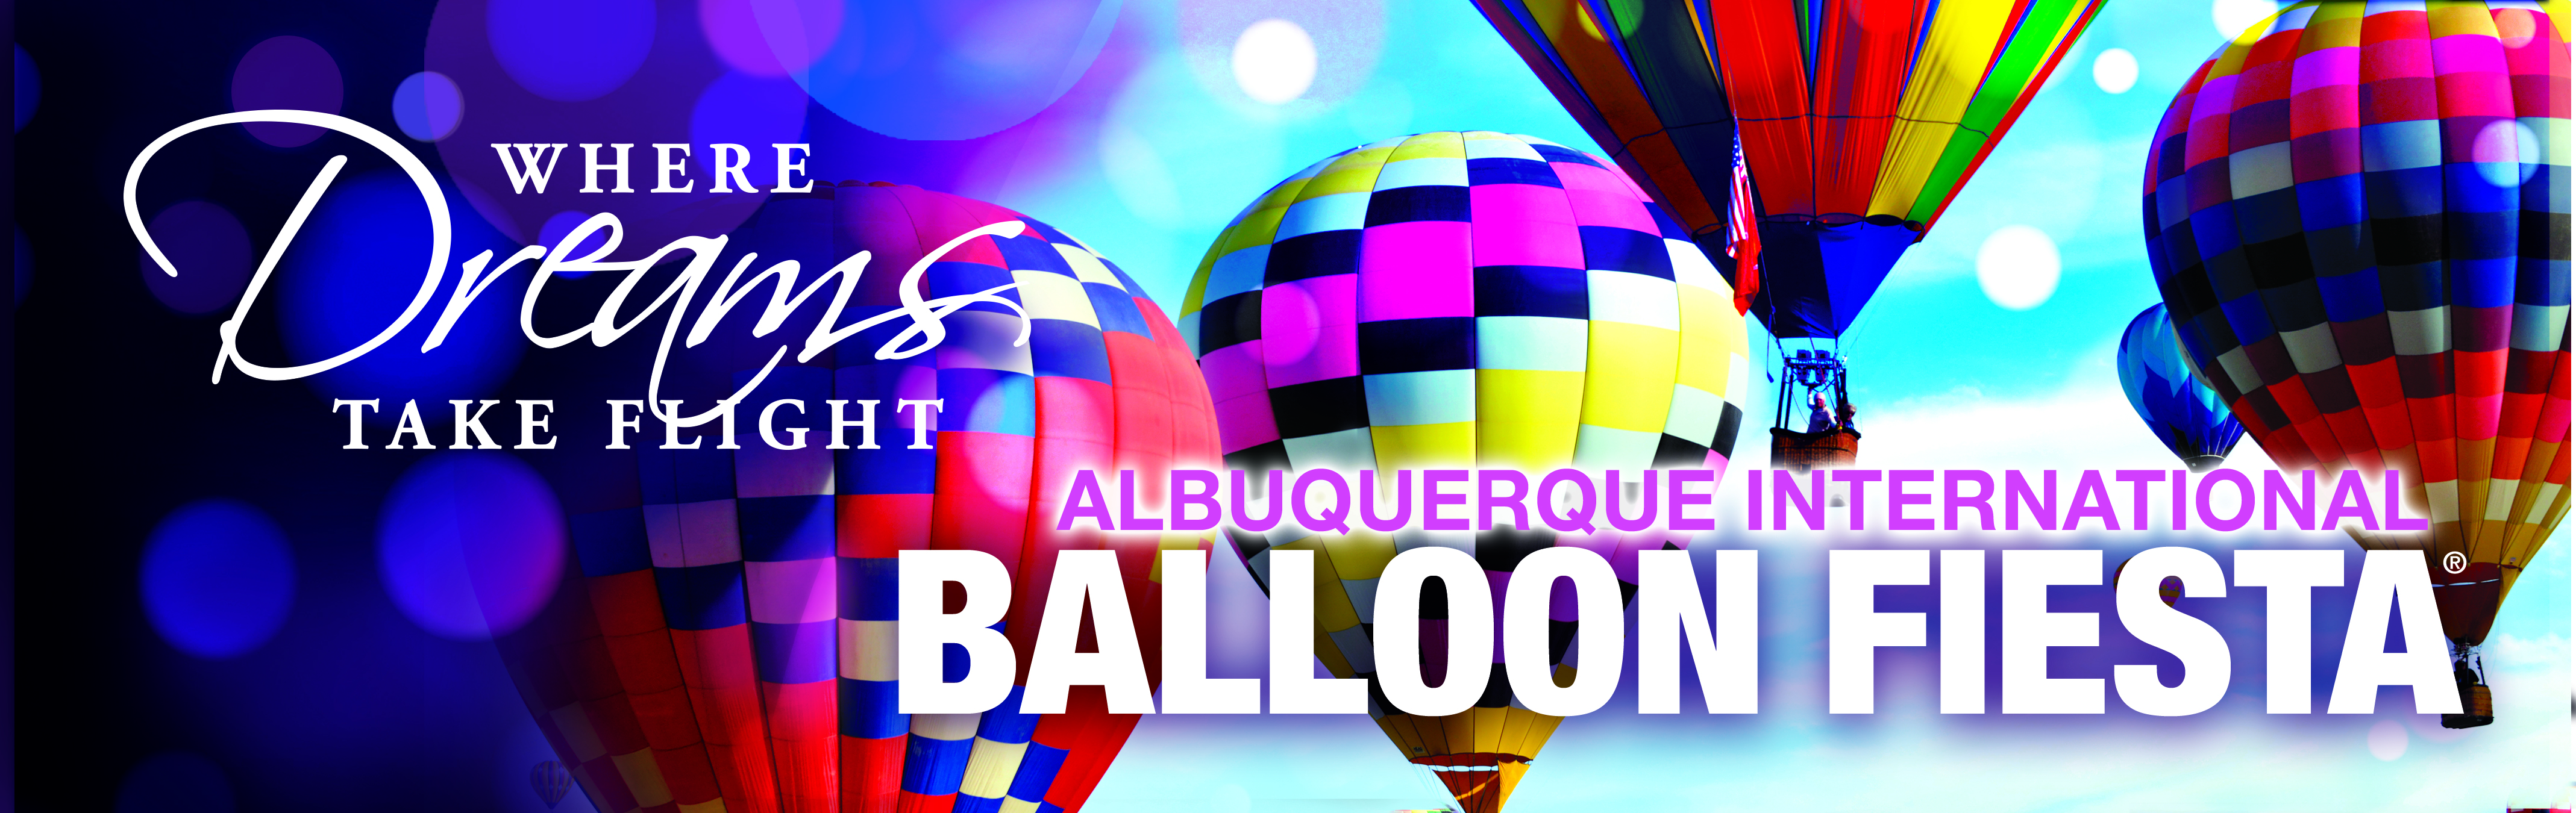 Where Dreams Take Flight - Albuquerque International Balloon Fiesta - AIBF